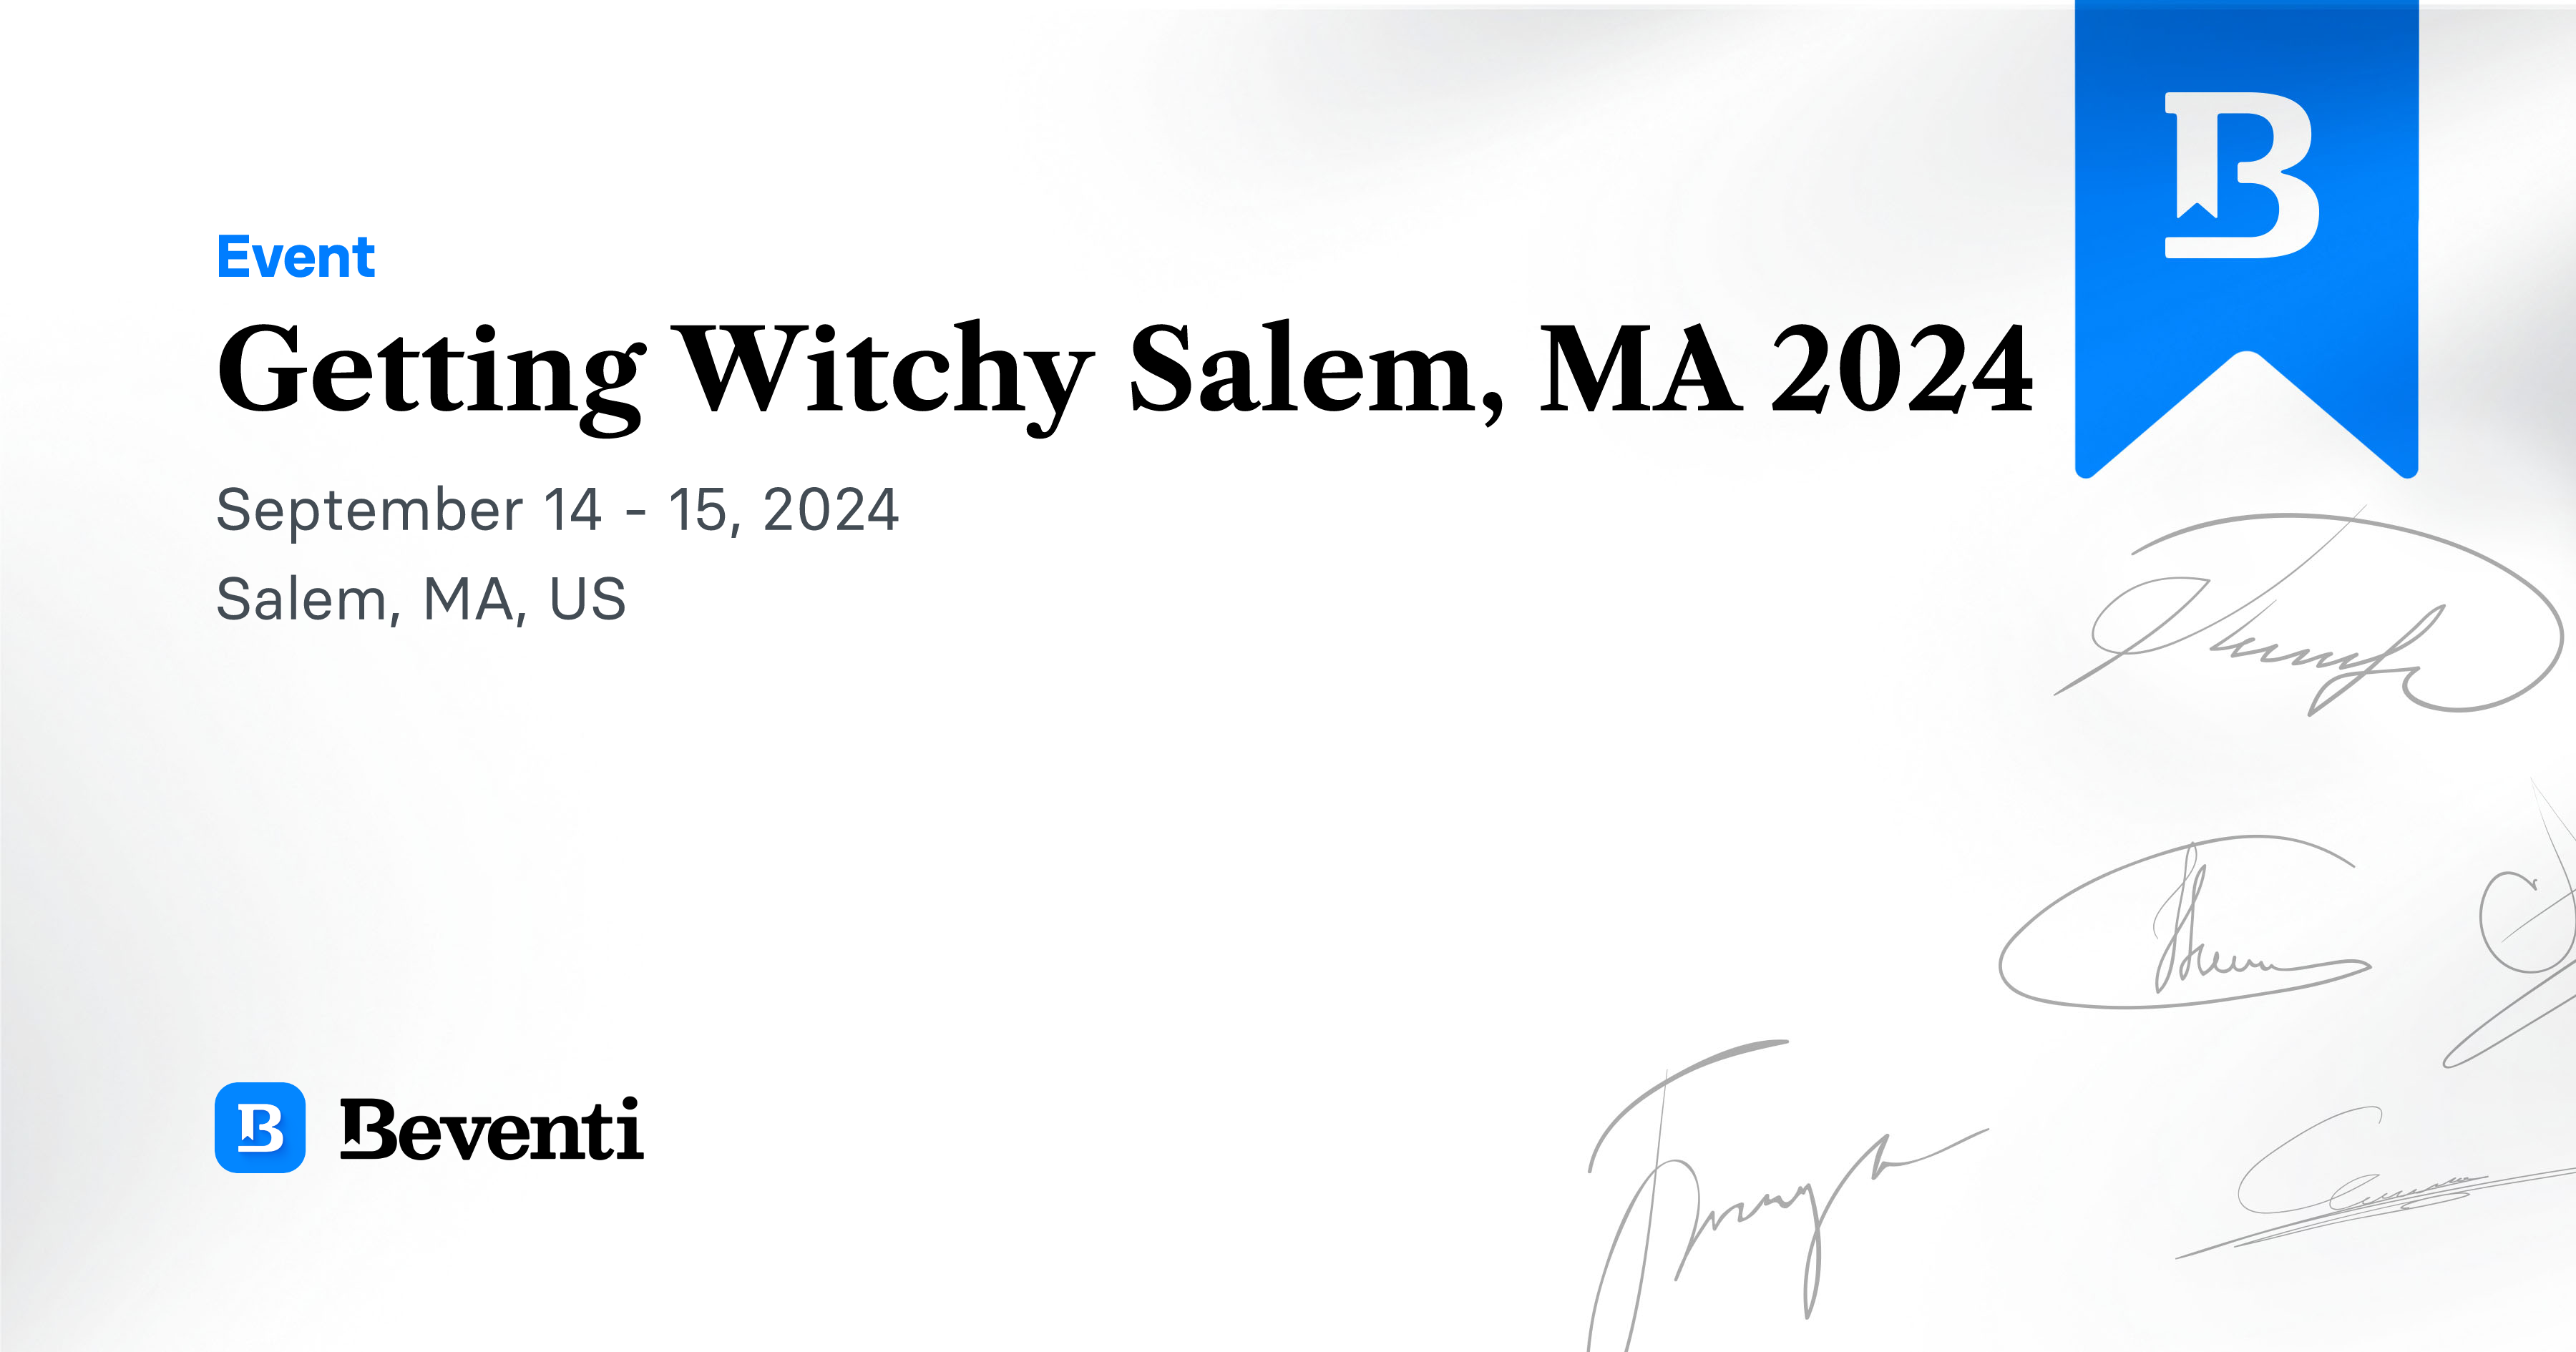 Getting Witchy Salem, MA 2024 Beventi